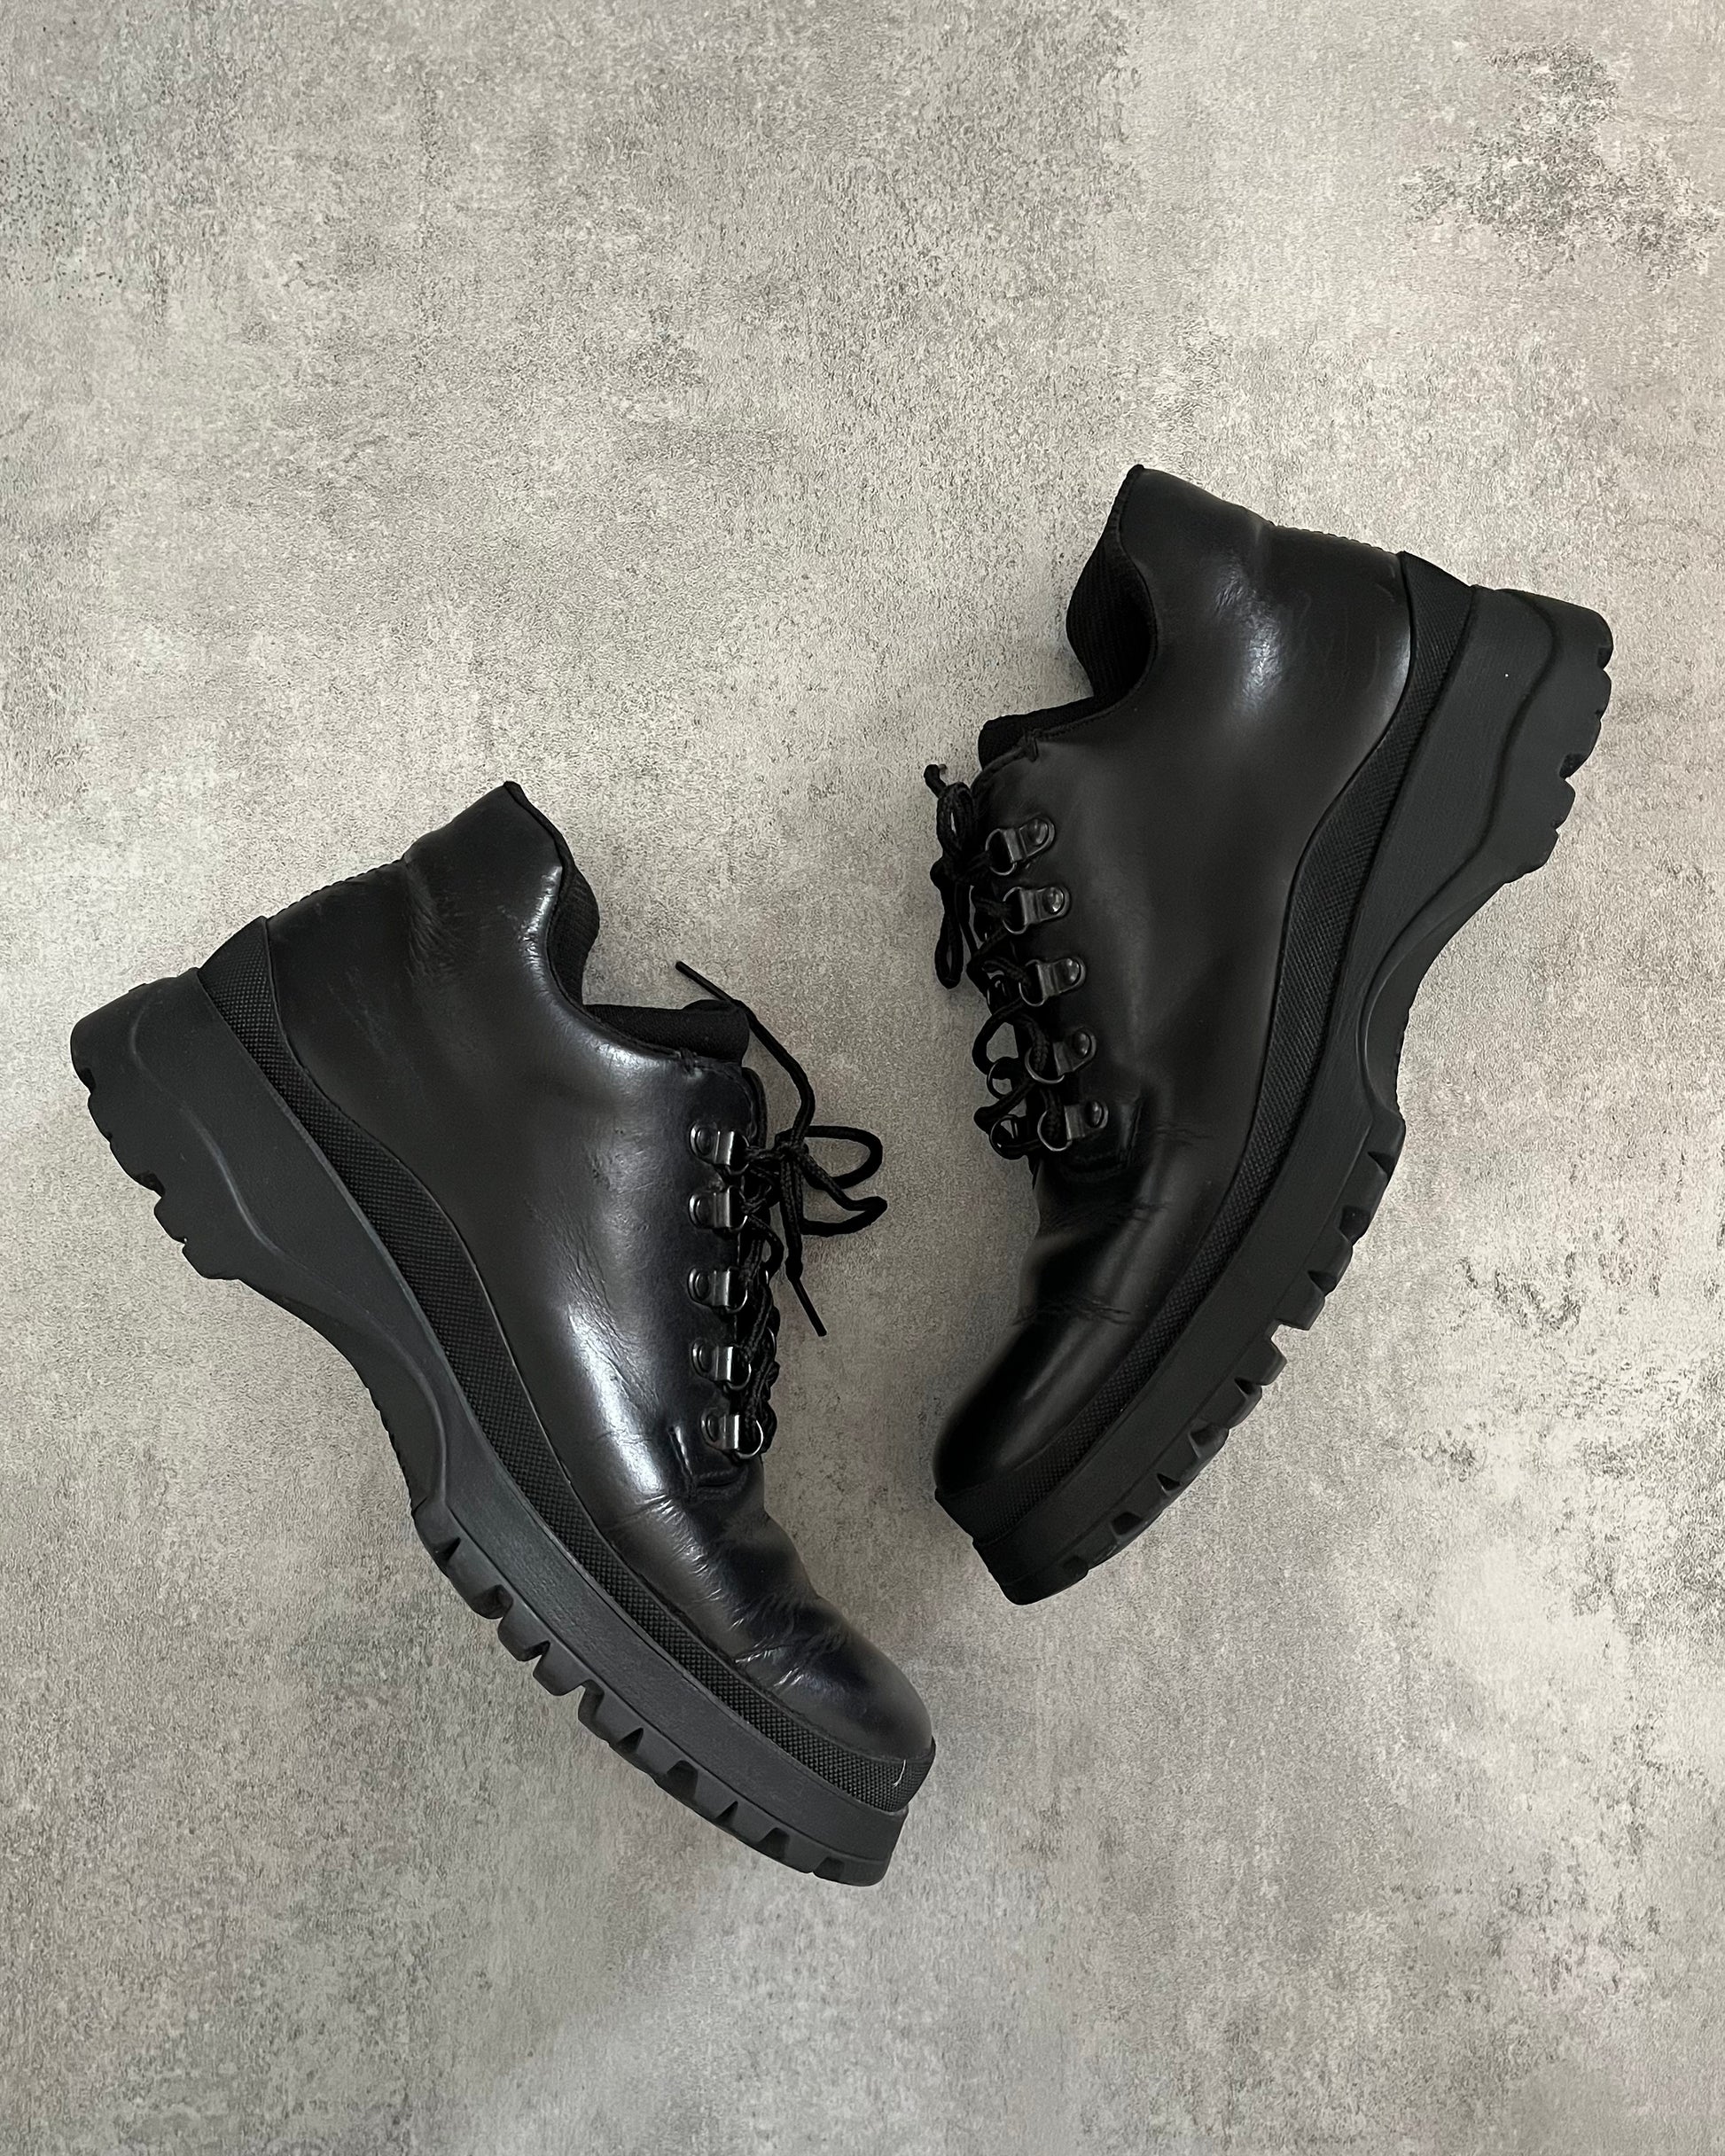 AW1999 Prada Vibram Leather Boots (41) - 5